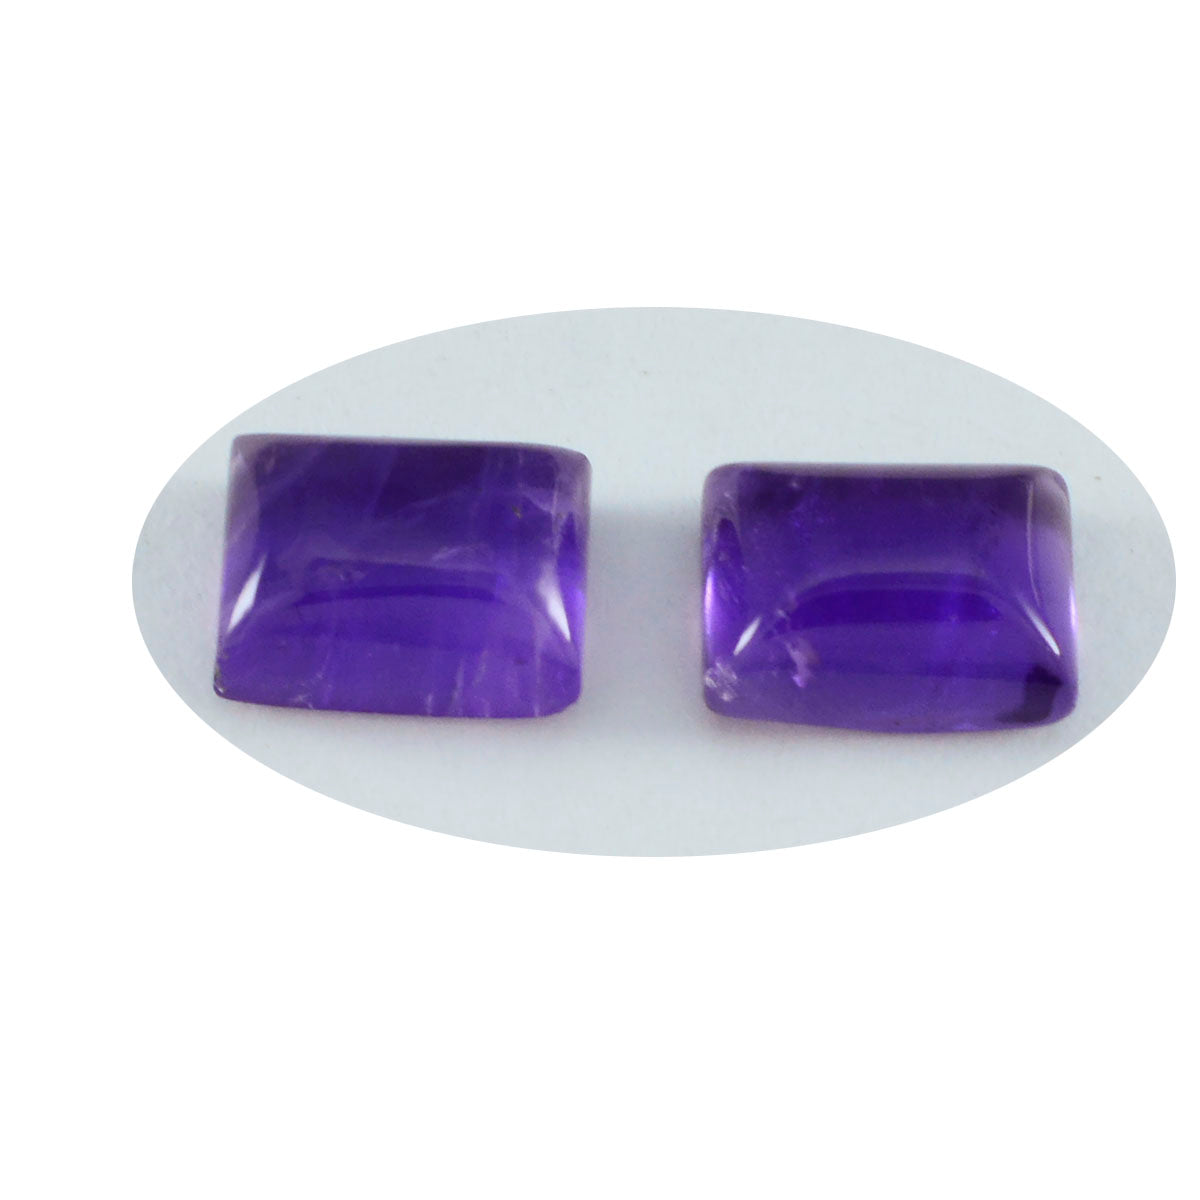 Riyogems 1PC Purple Amethyst Cabochon 4x6 mm Octagon Shape astonishing Quality Loose Gemstone